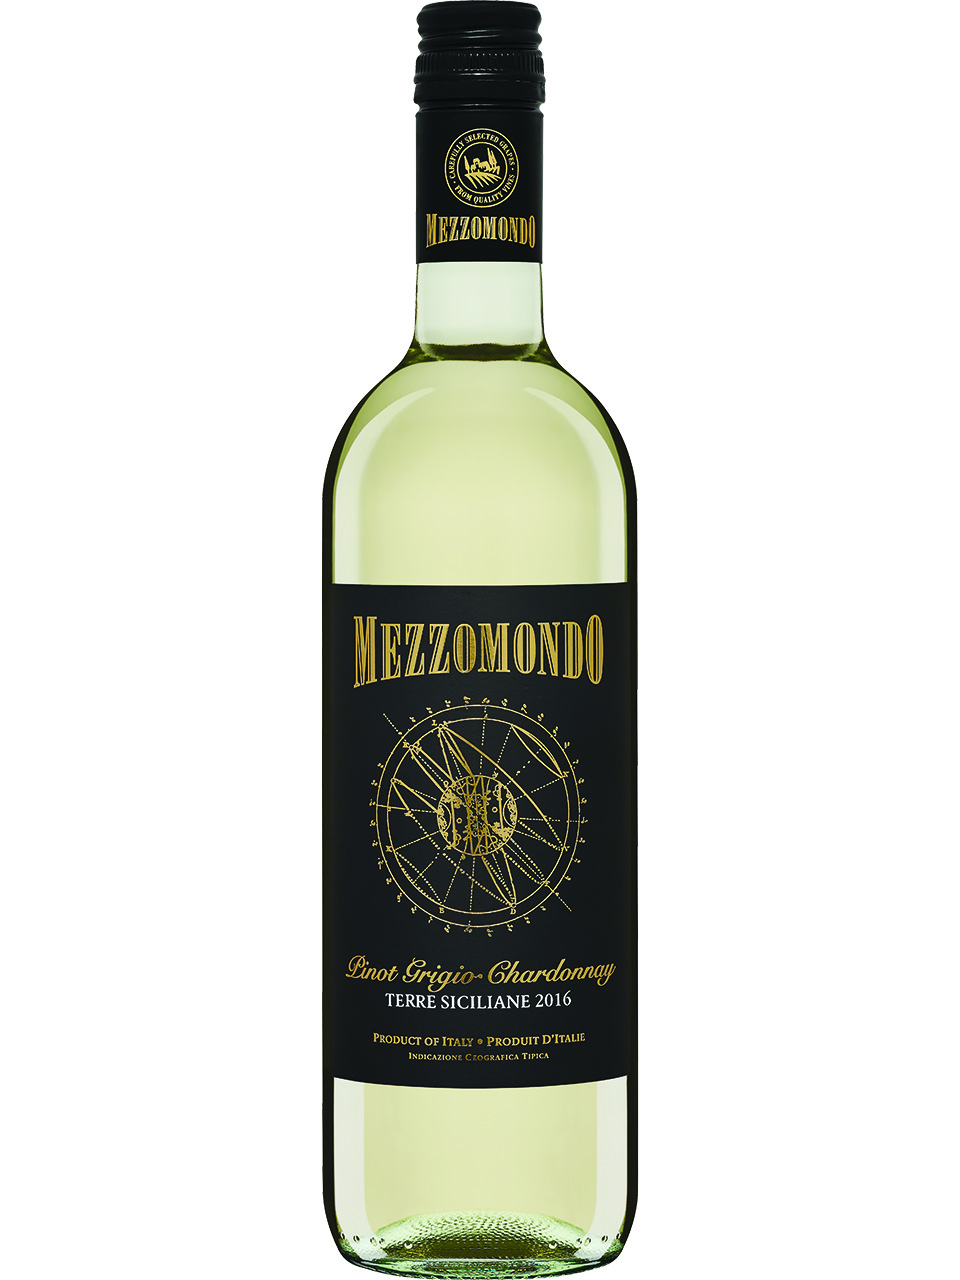 Mezzomondo Pinot Grigio Chardonnay